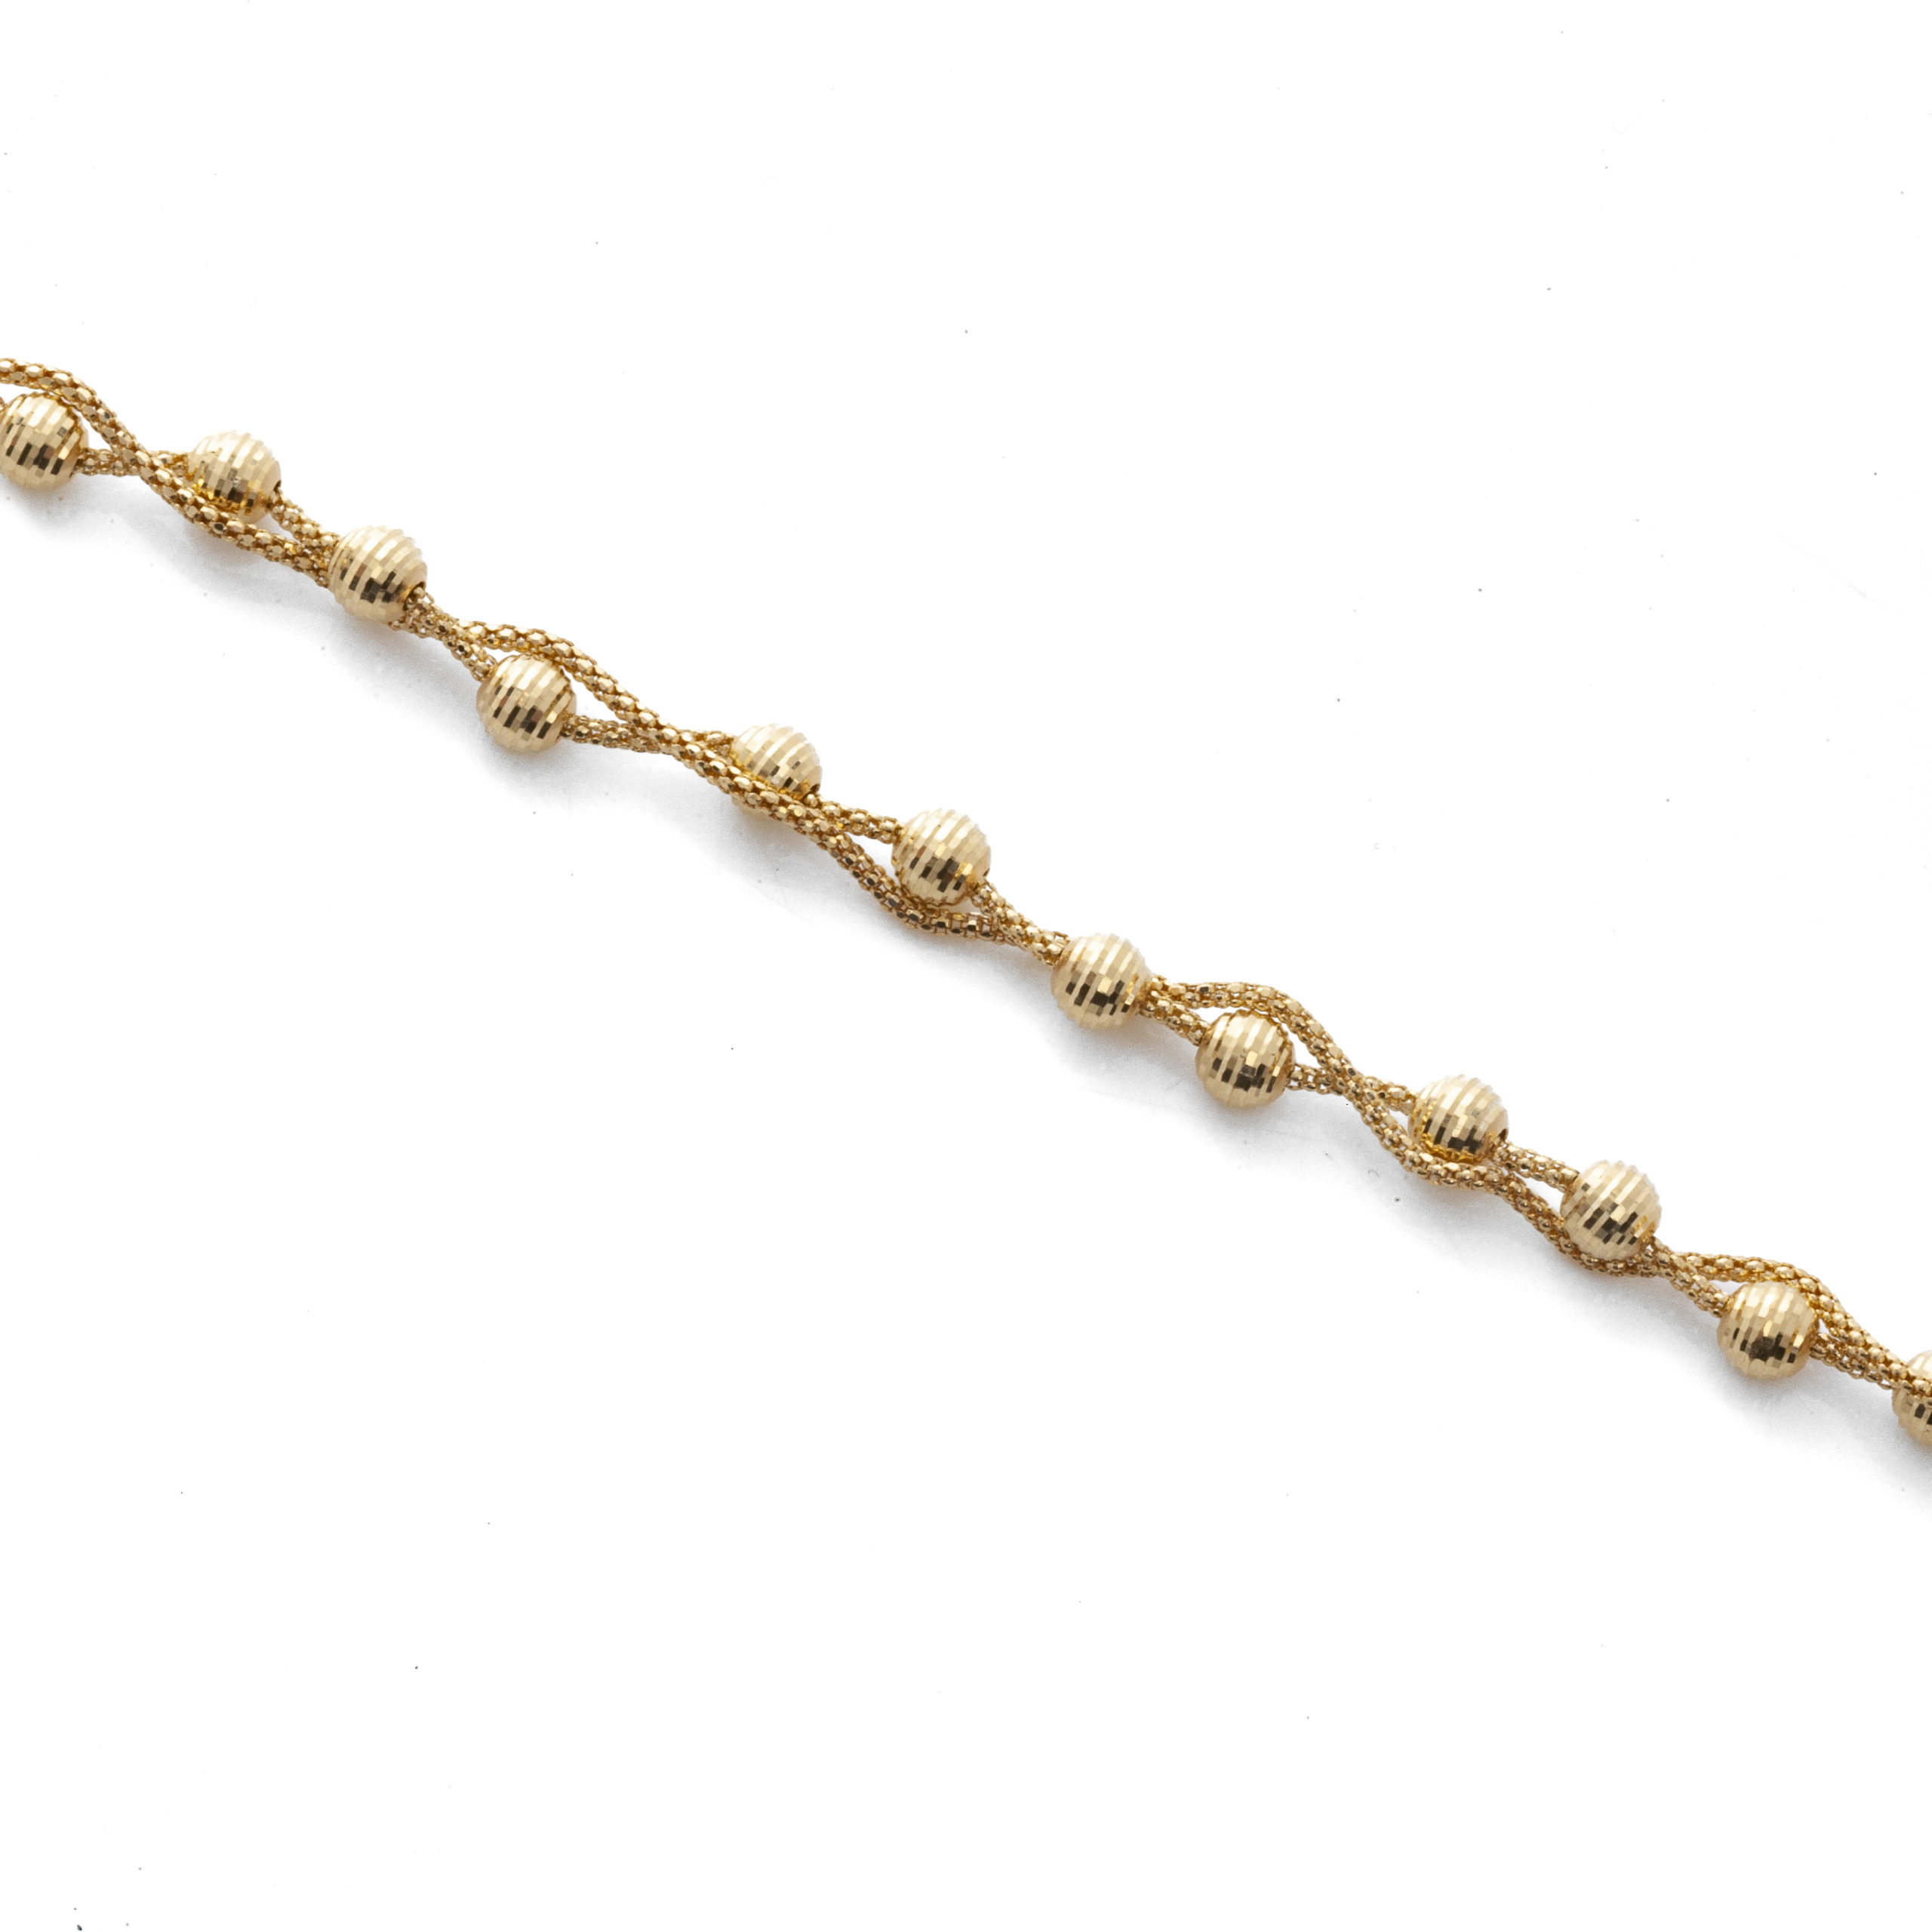 Ornate Gold Bracelet with Balls